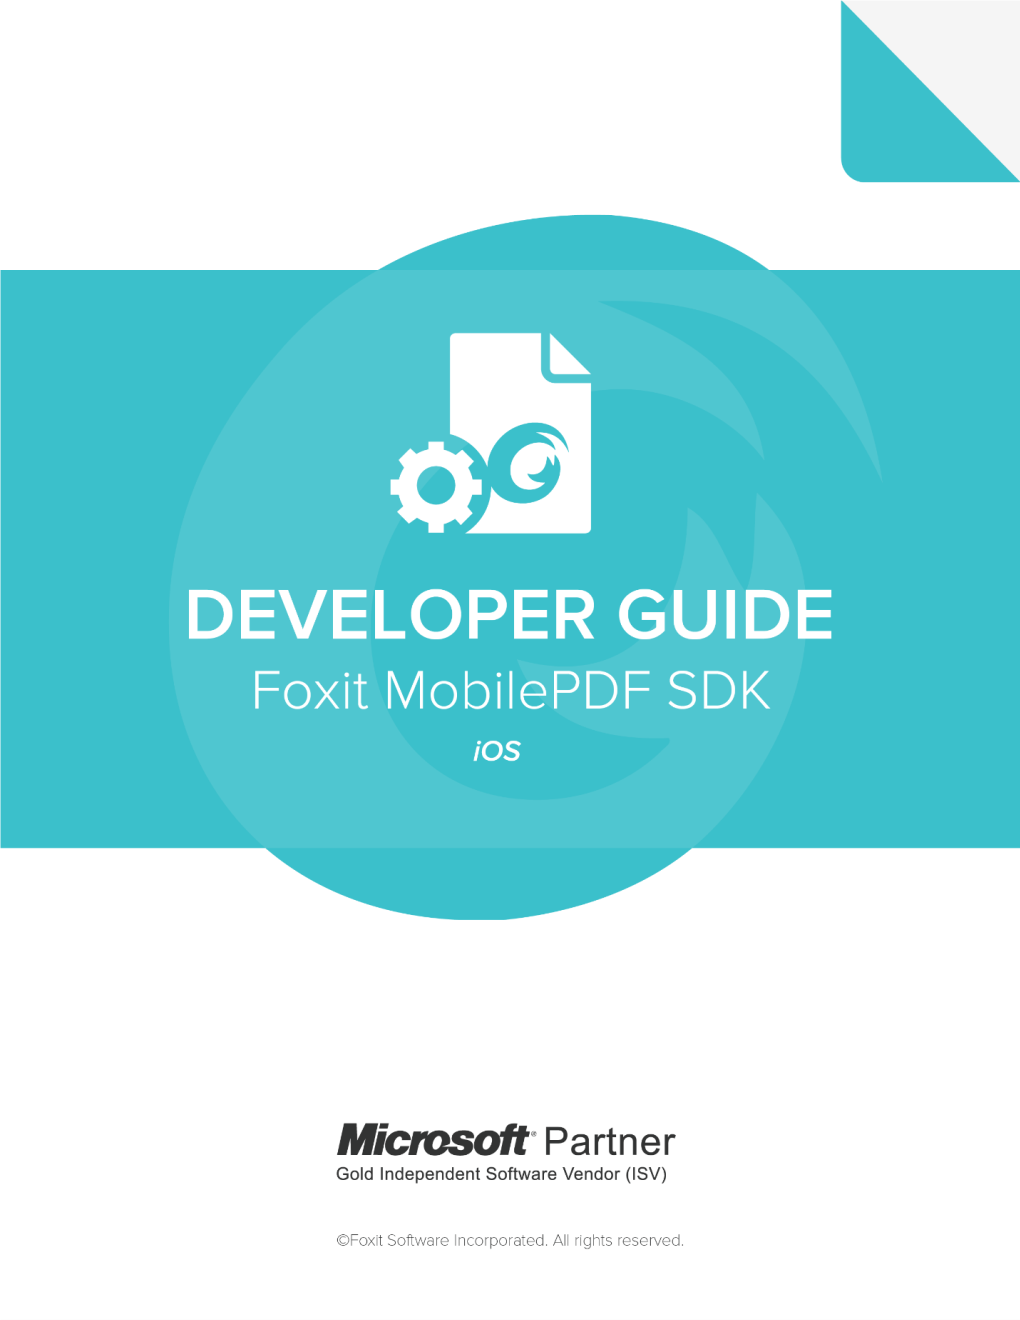 Foxit Mobilepdf SDK Developer Guide